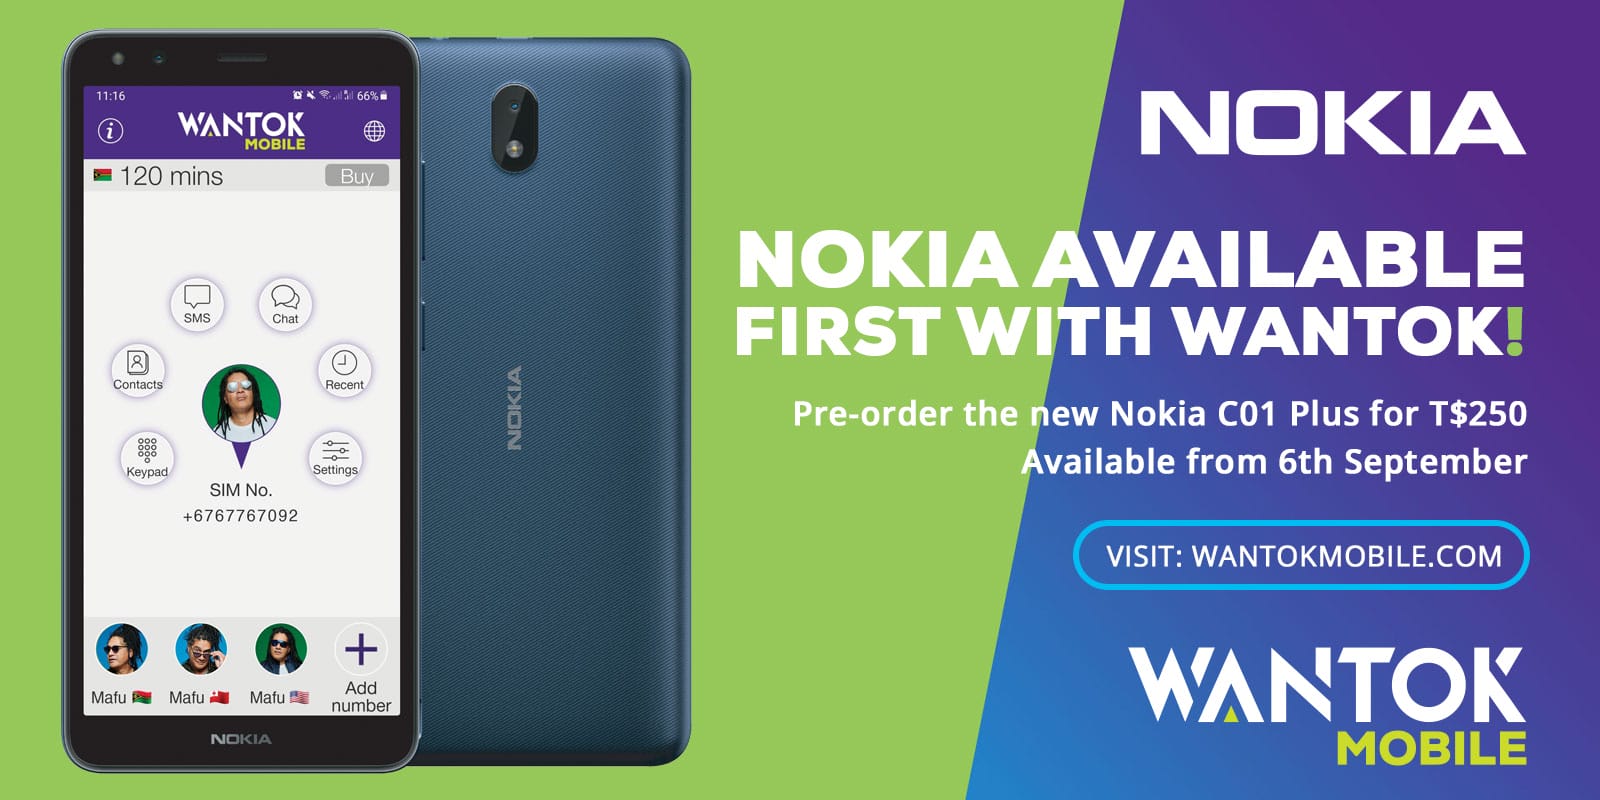 WanTok Mobile - Nokia Mobile Promotion Banner